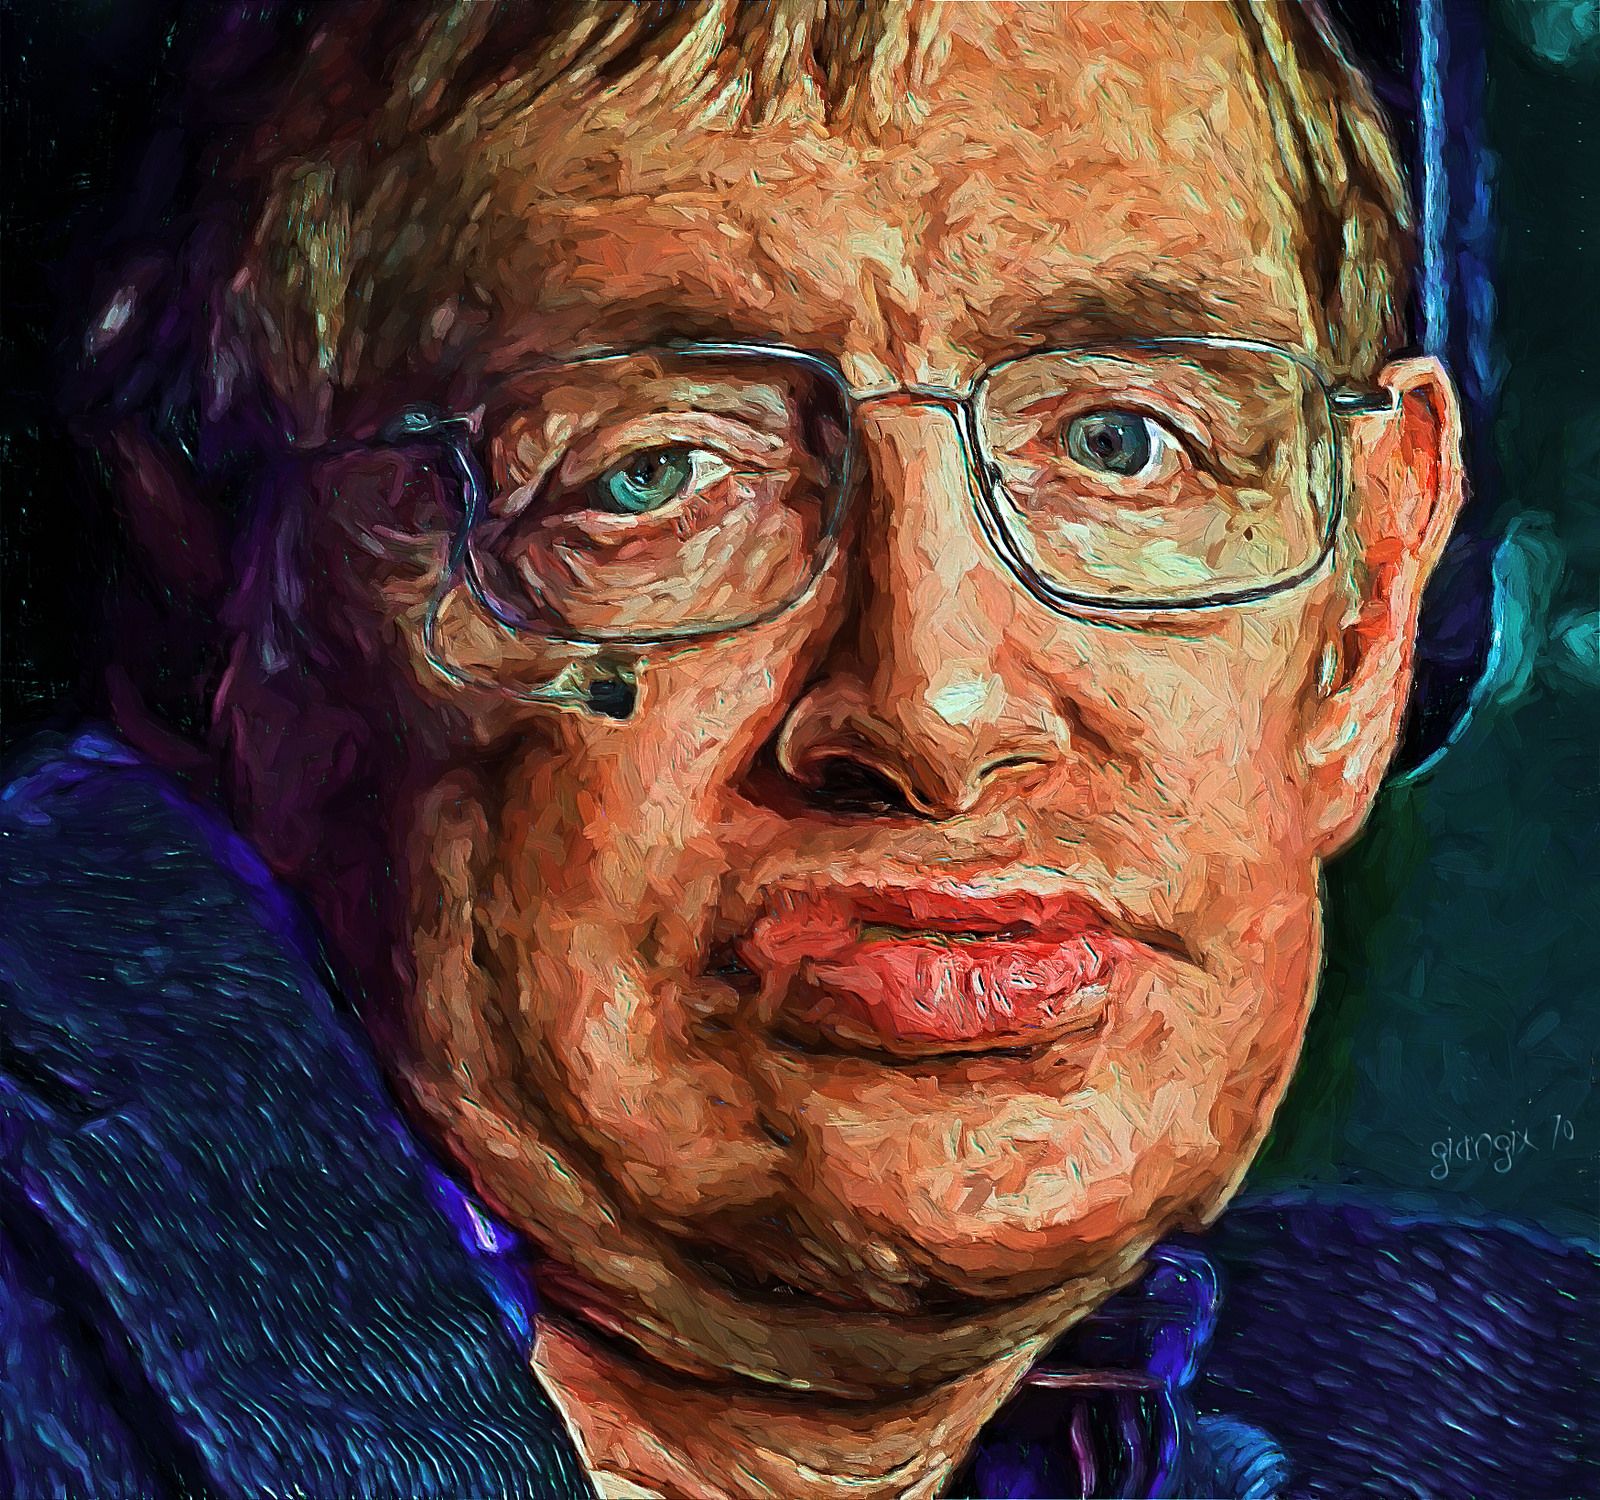 Biographical Sketch of Stephen Hawking (1942-2018)